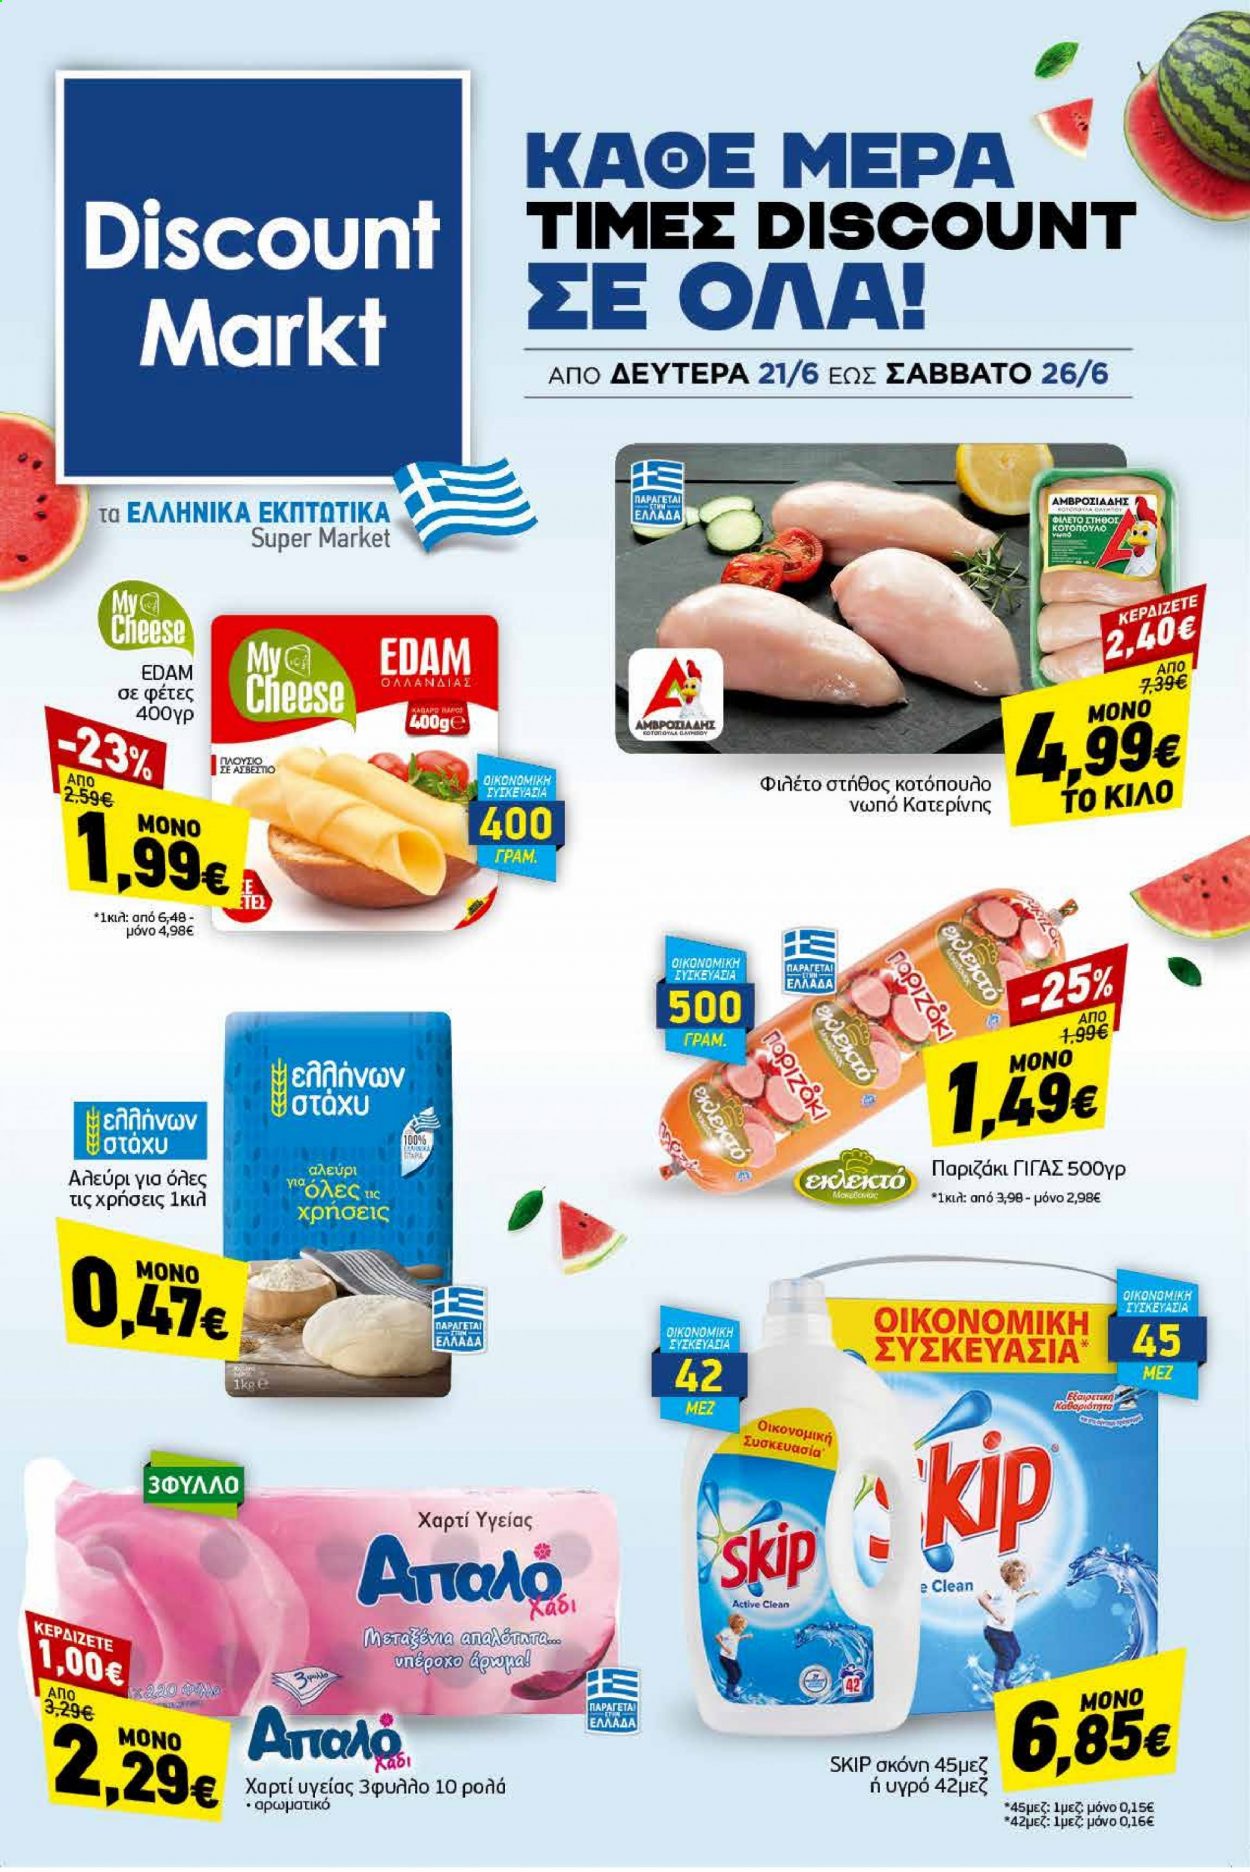 thumbnail - Φυλλάδια Discount Markt - 21.06.2021 - 26.06.2021 - Εκπτωτικά προϊόντα - κοτόπουλο, αλεύρι, χαρτί υγείας, Skip. Σελίδα 1.